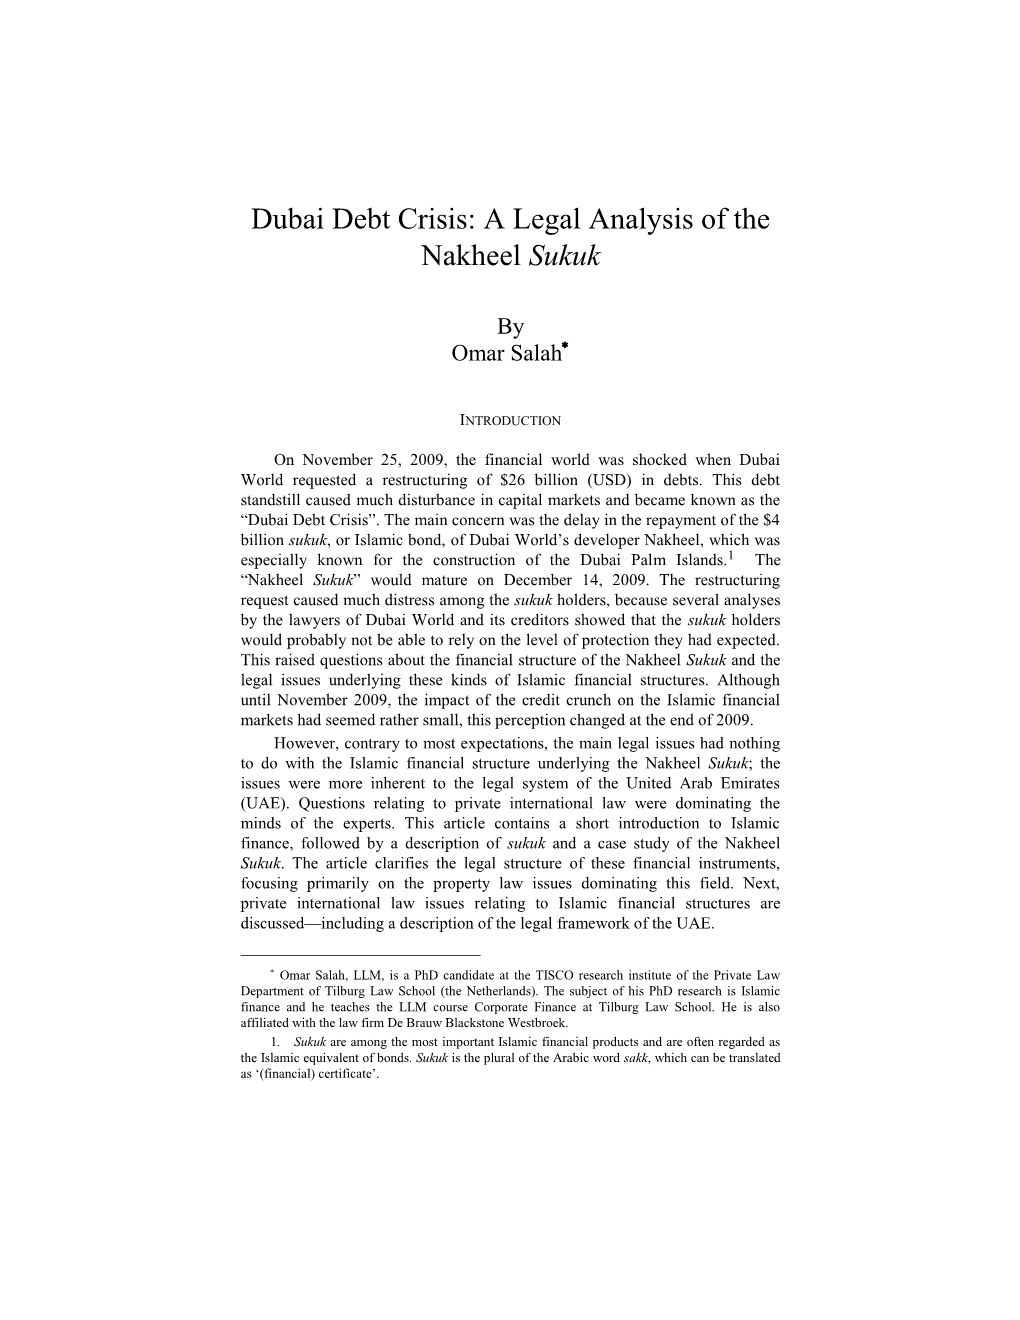 A Legal Analysis of the Nakheel Sukuk